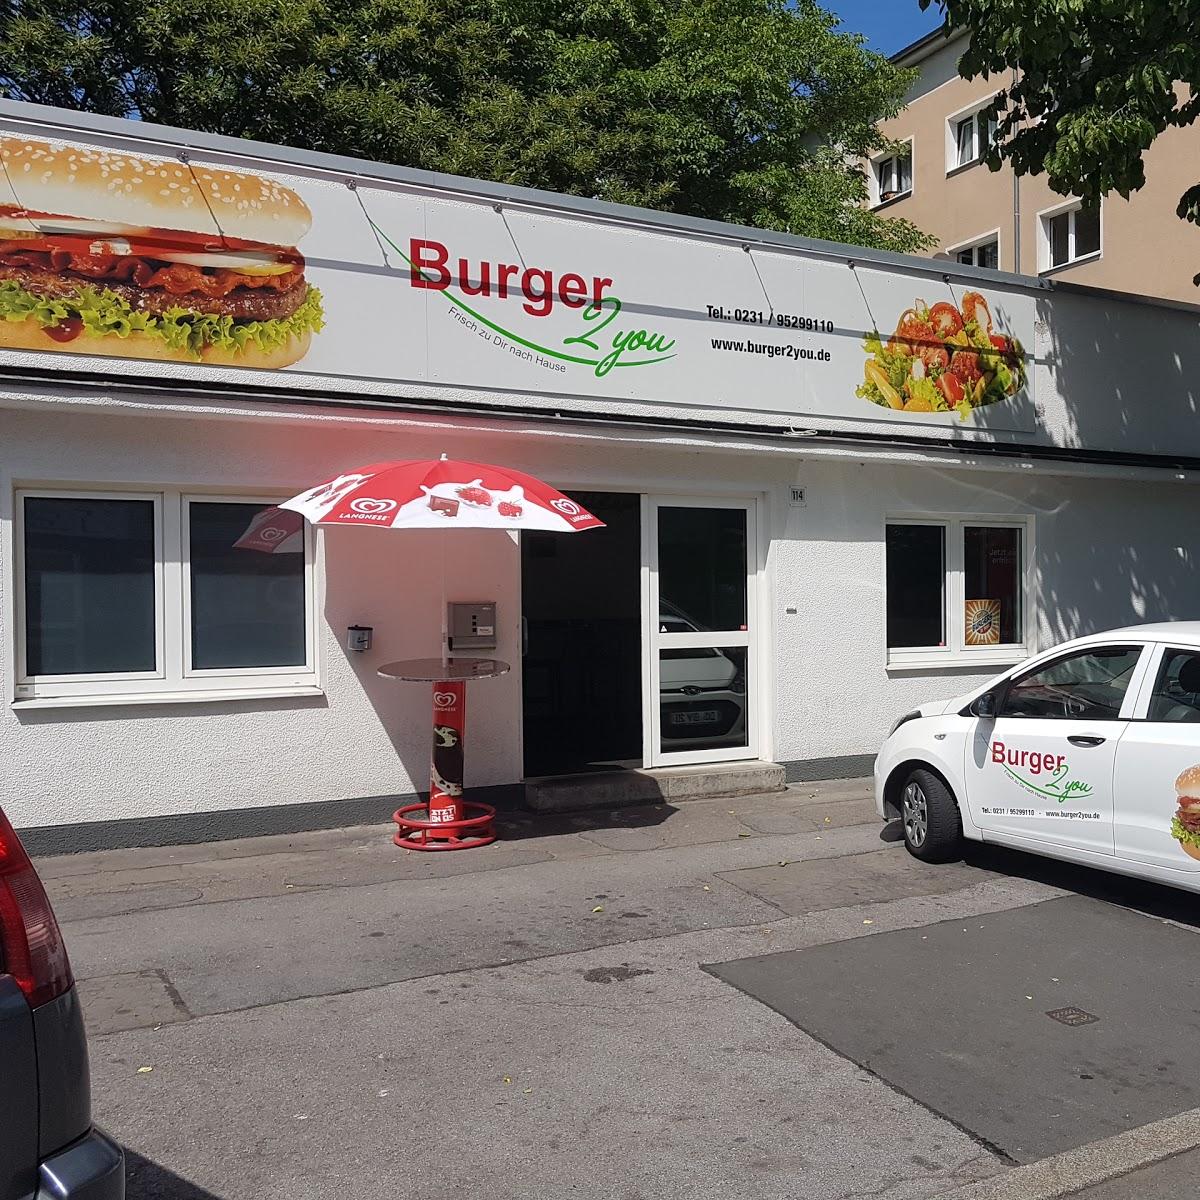 Restaurant "Burger2you" in Dortmund